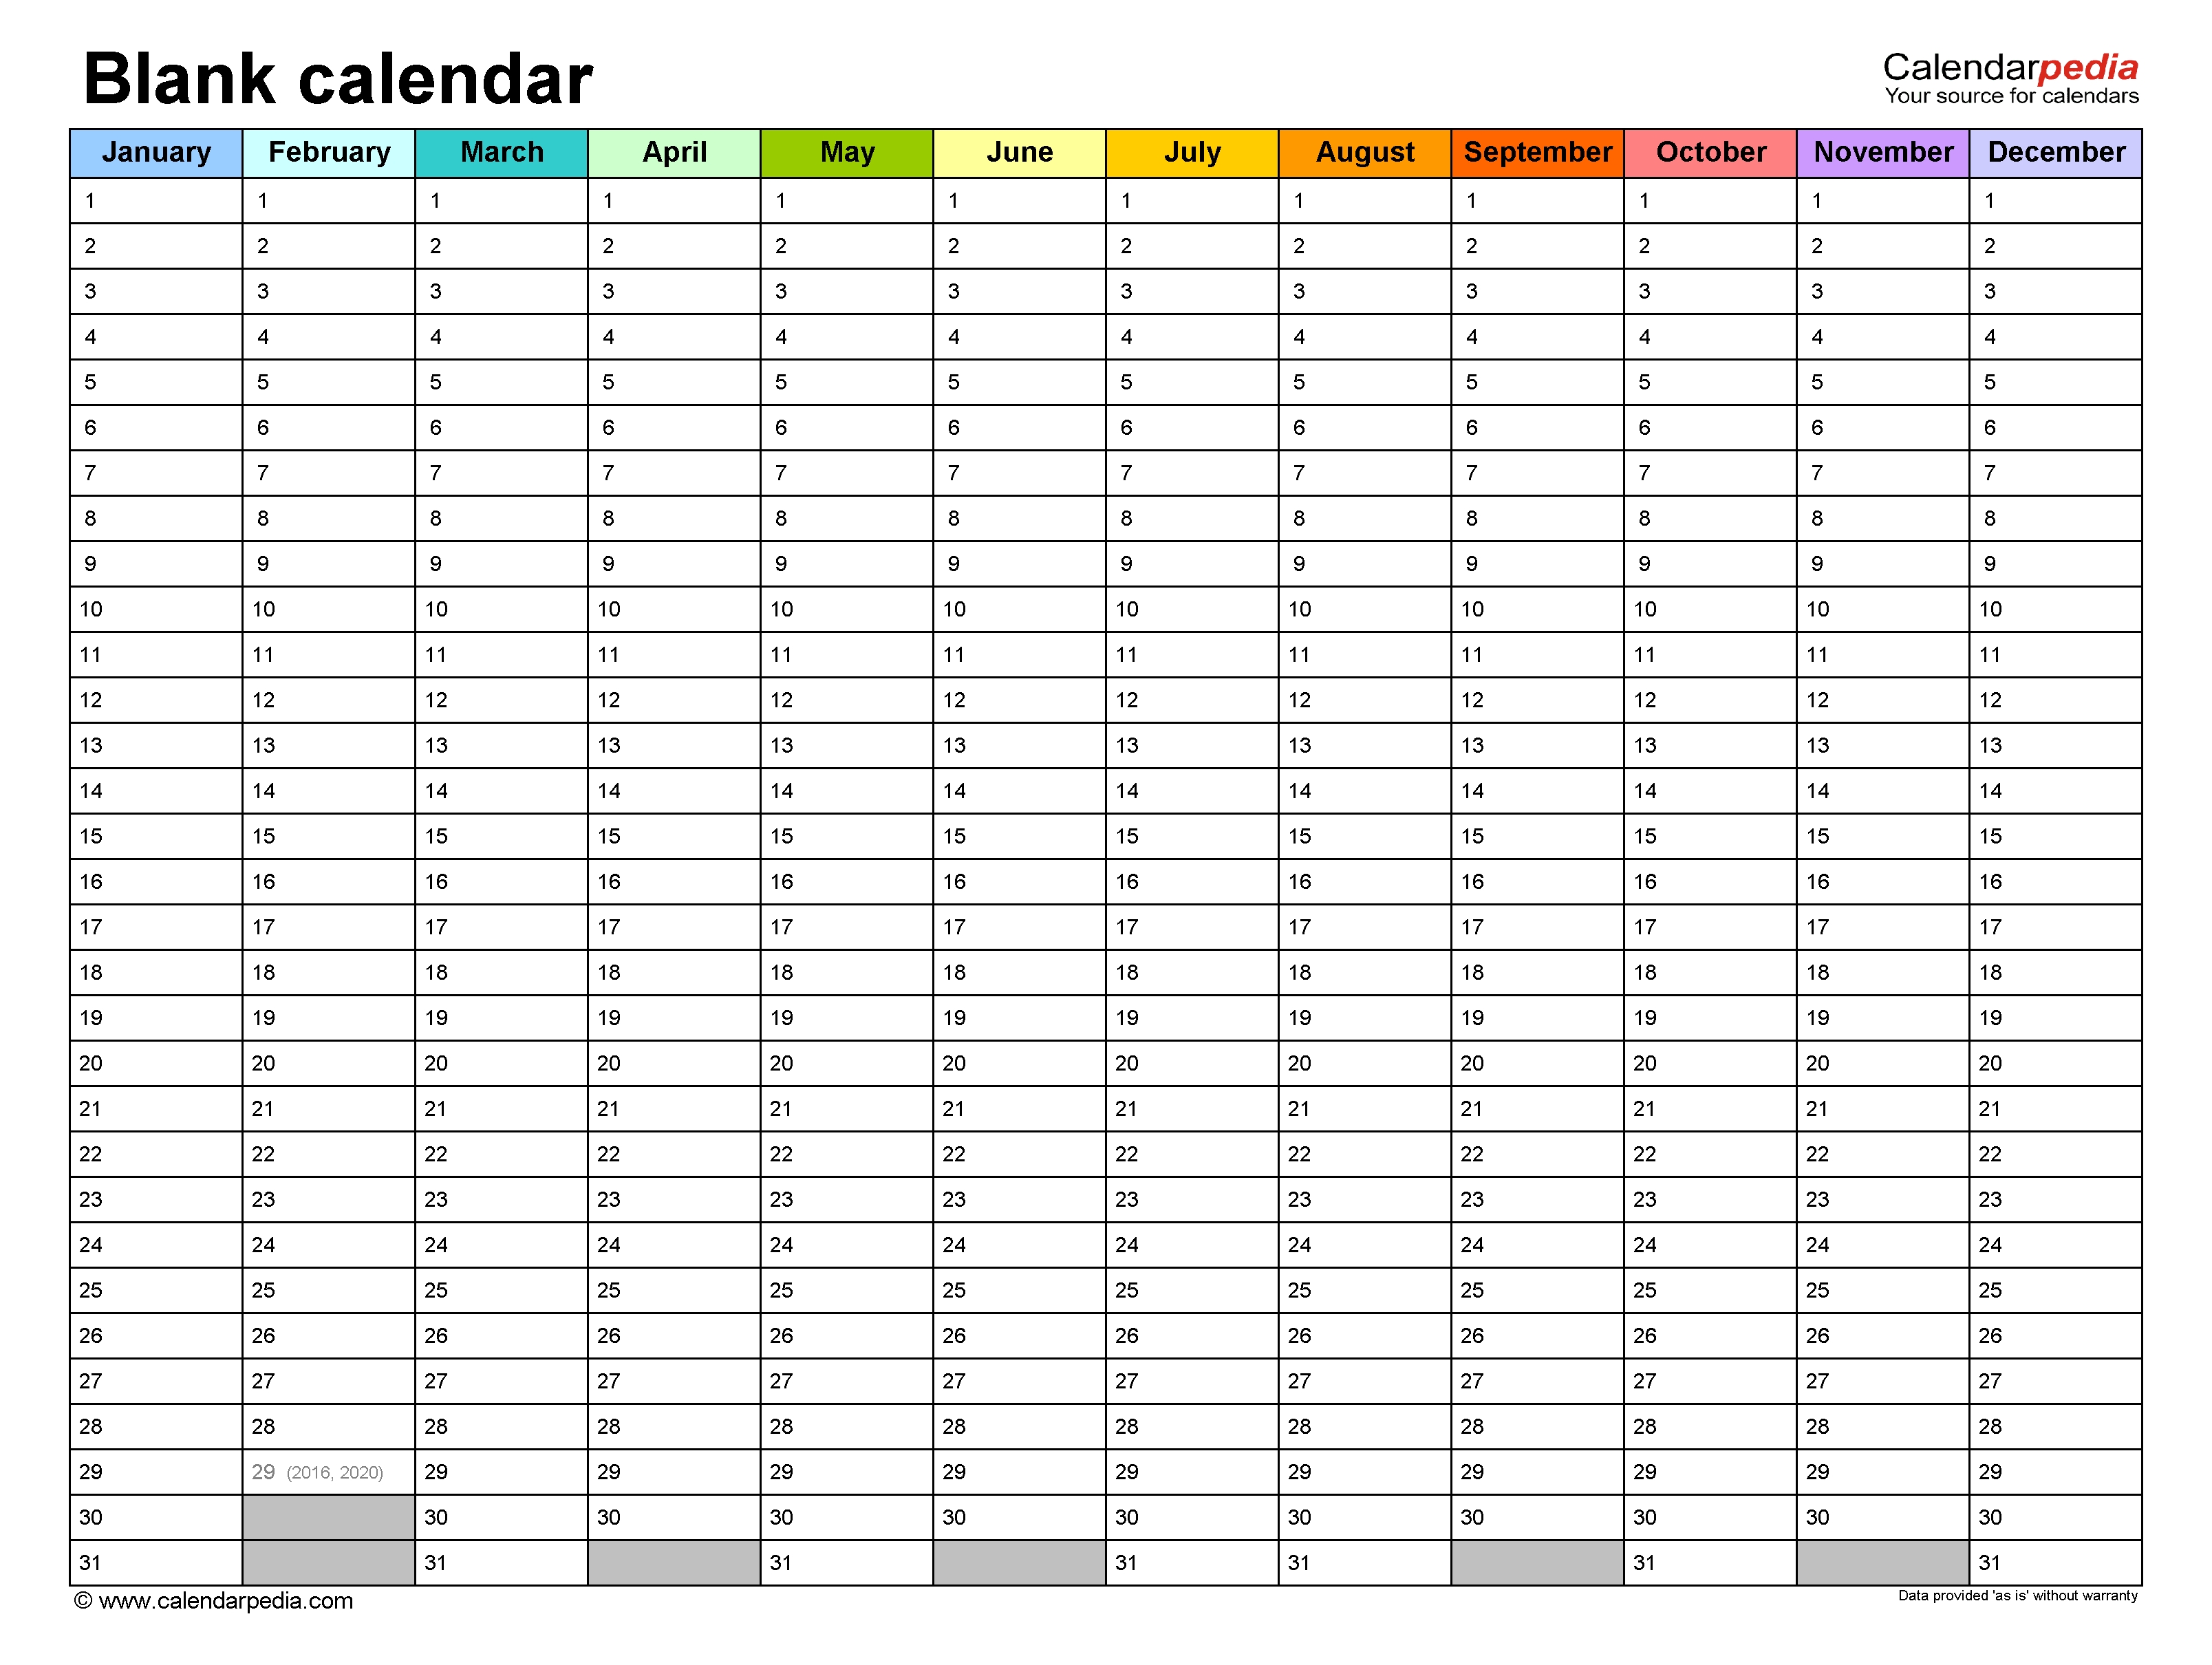 Blank Calendars - Free Printable Microsoft Word Templates Calendar Template In Word